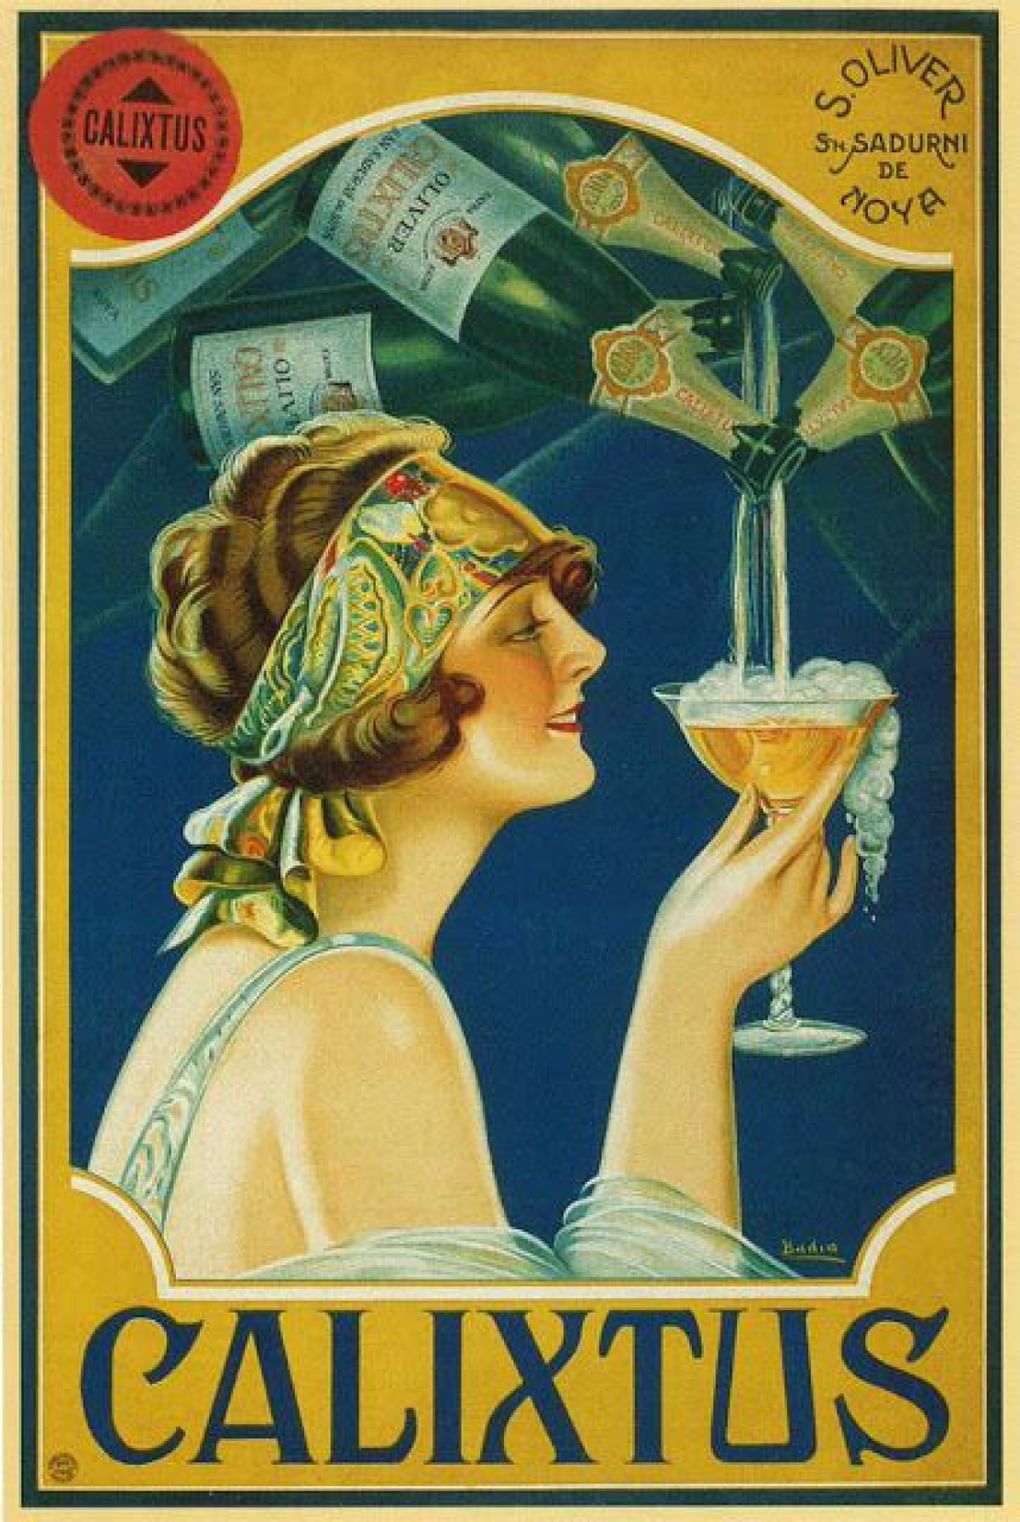 Реклама шампанского Calixtus. 1920-е